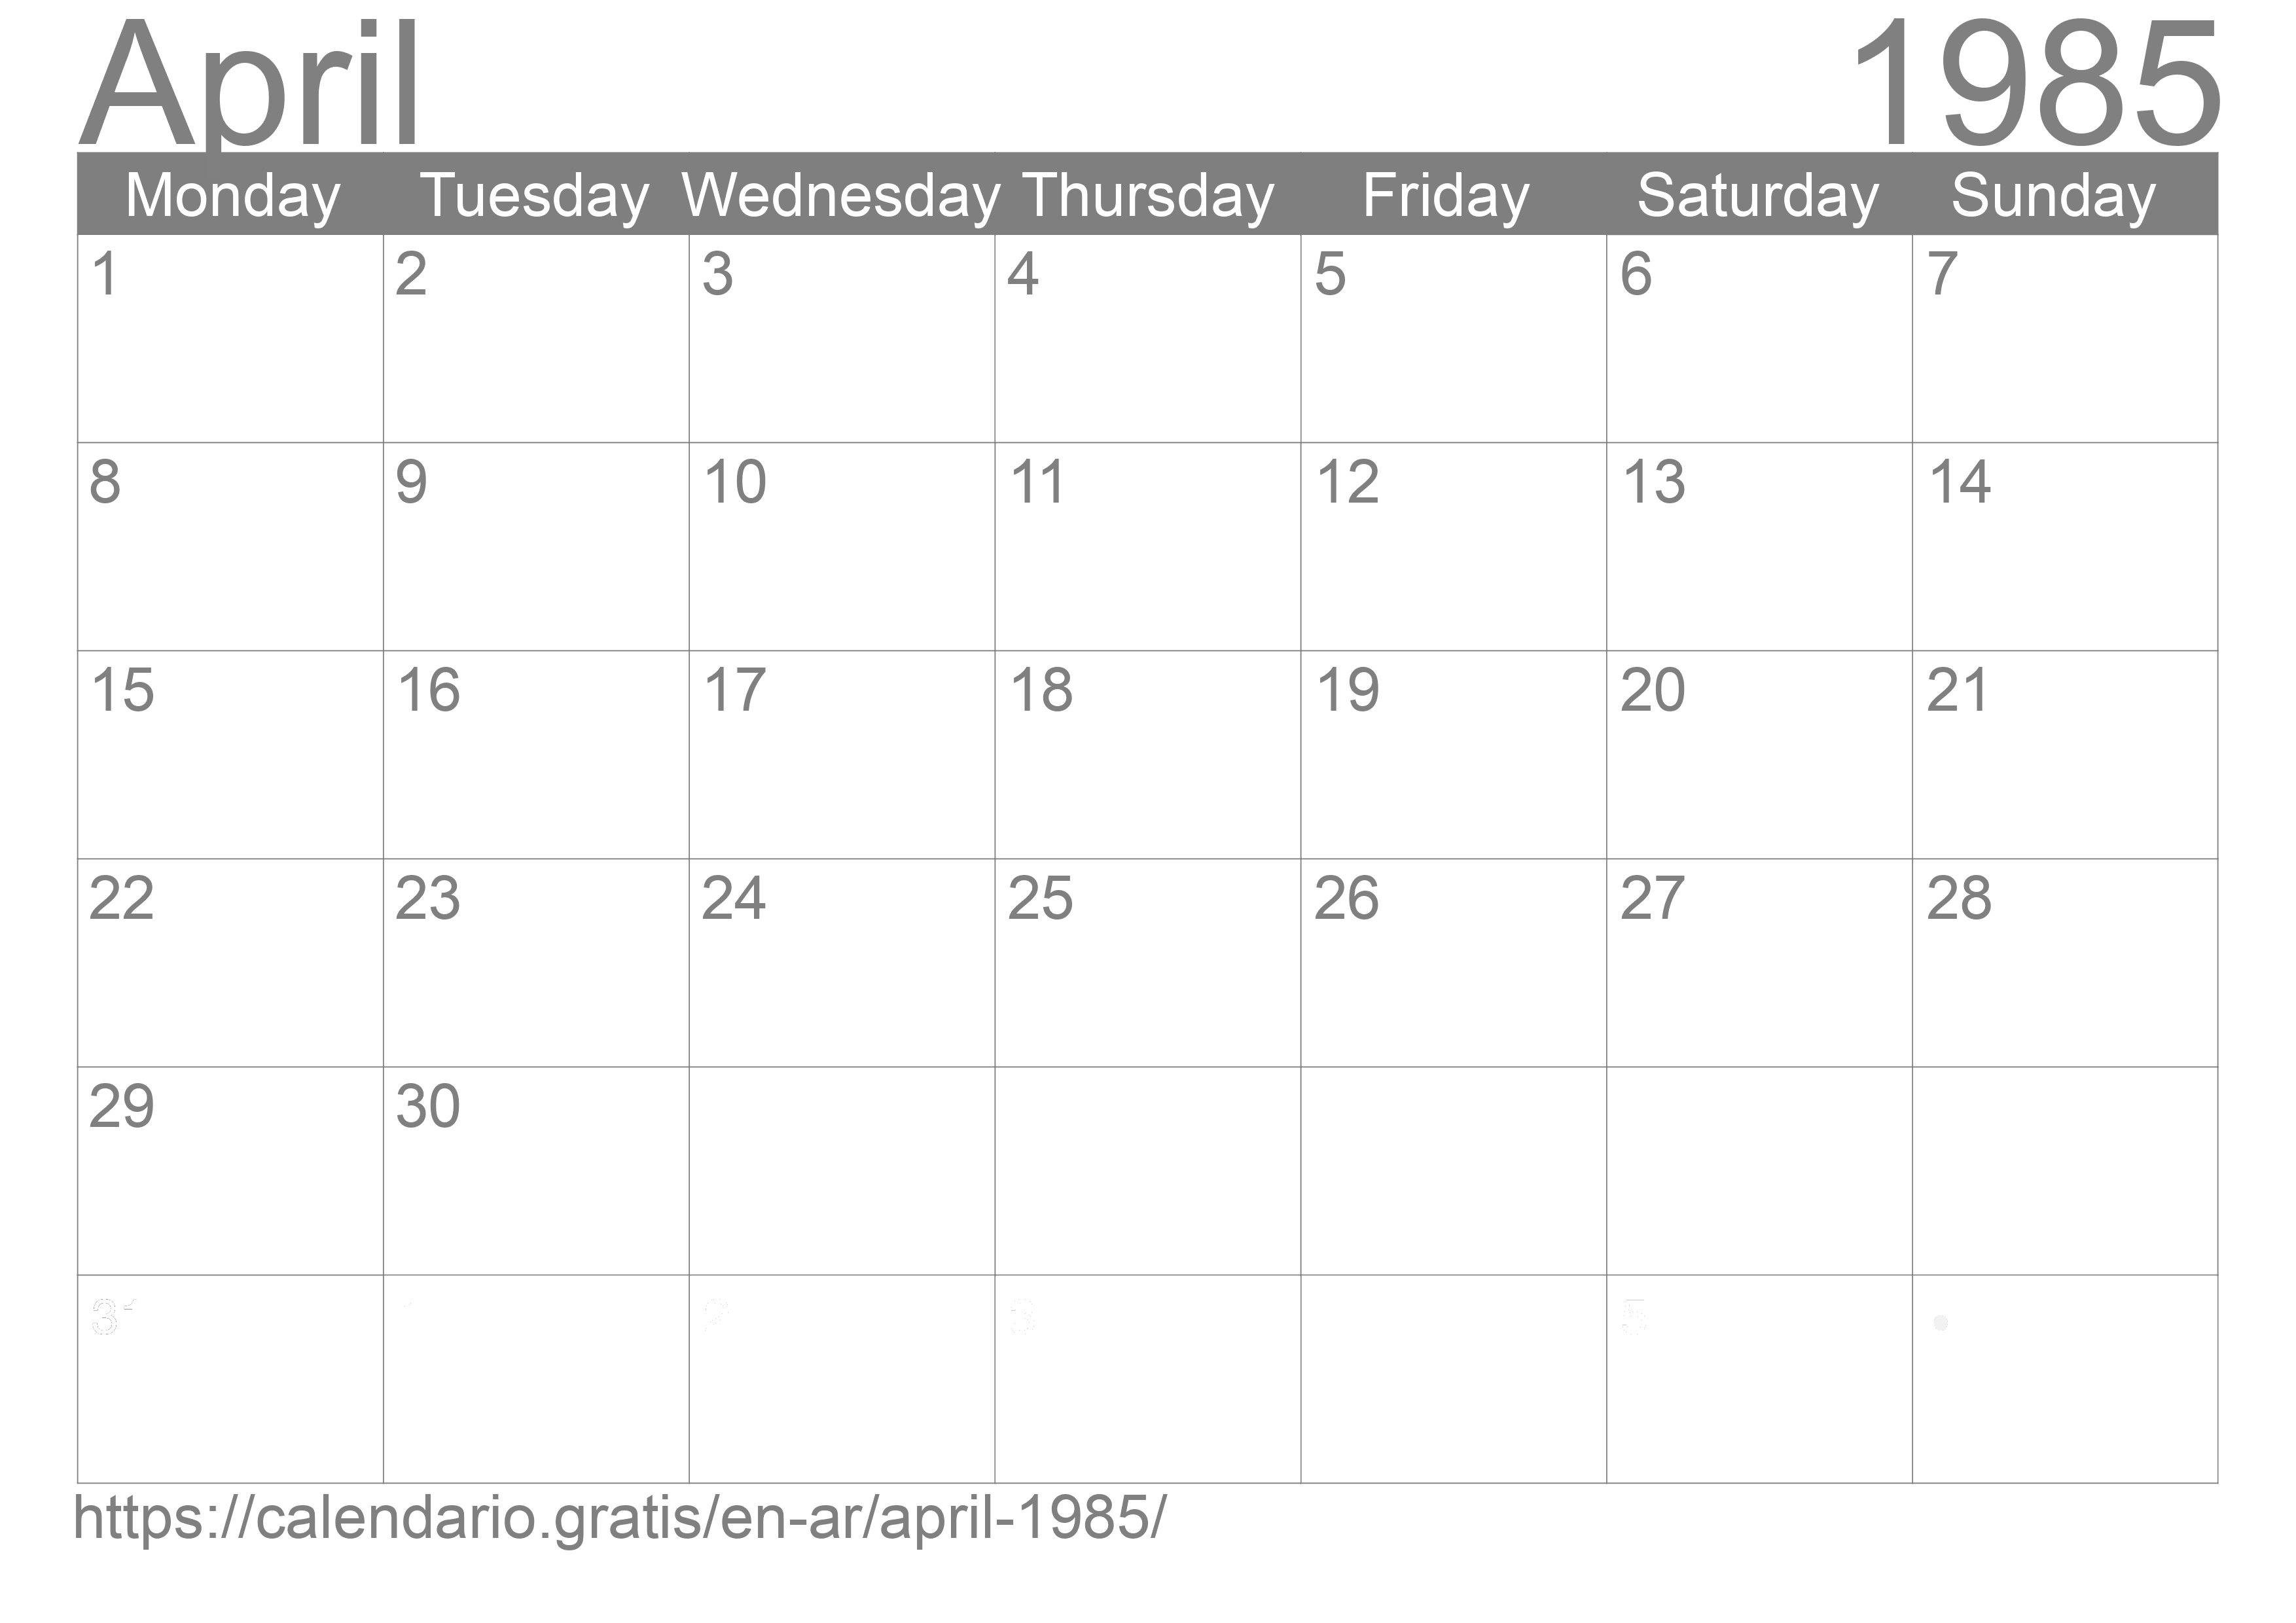 Calendar April 1985 from Argentina in English ☑️ Calendario Gratis